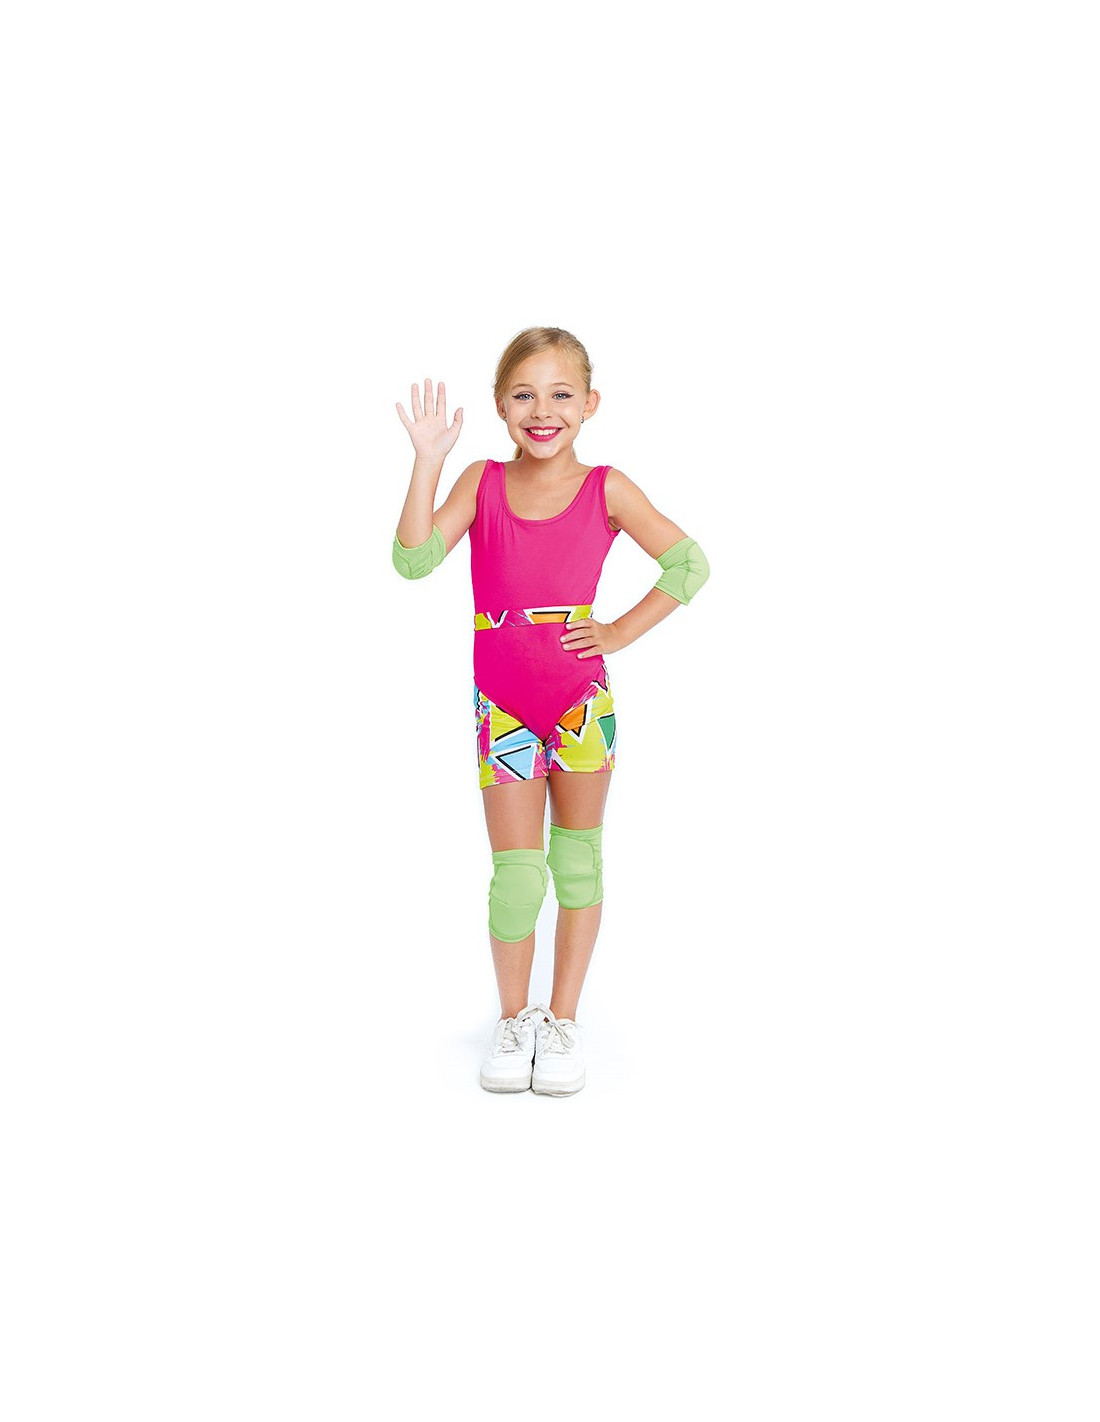 Disfraz de Barbie Deportista Patinadora para Mujer